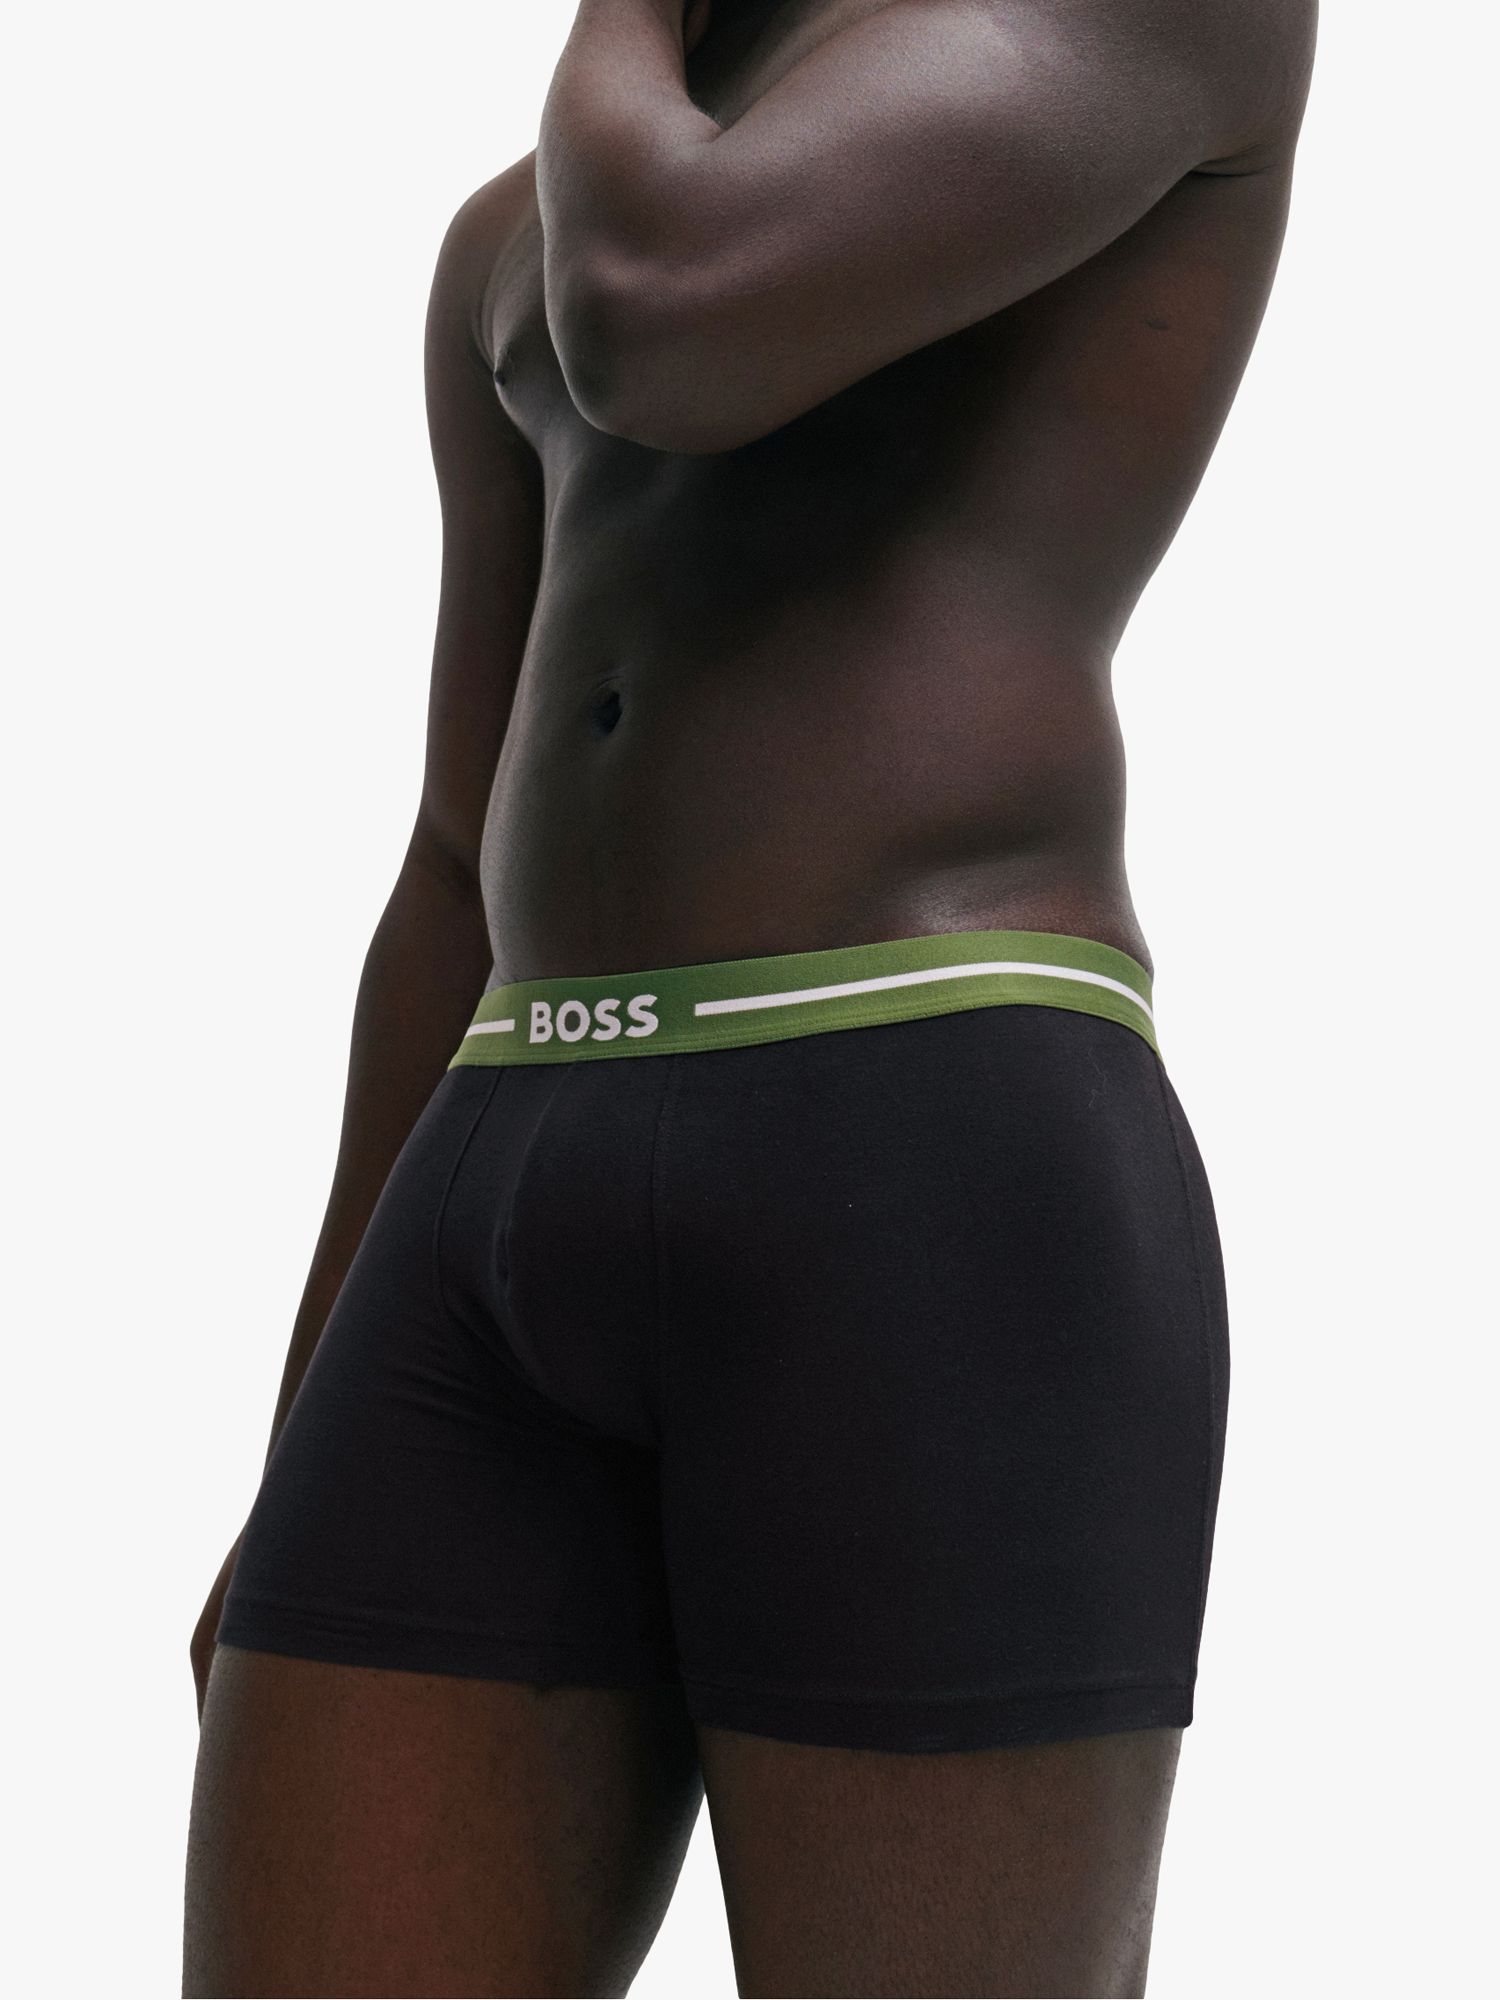 BOSS Logo Waist Cotton Stretch Trunks, Pack of 3, Black/Multi, XL